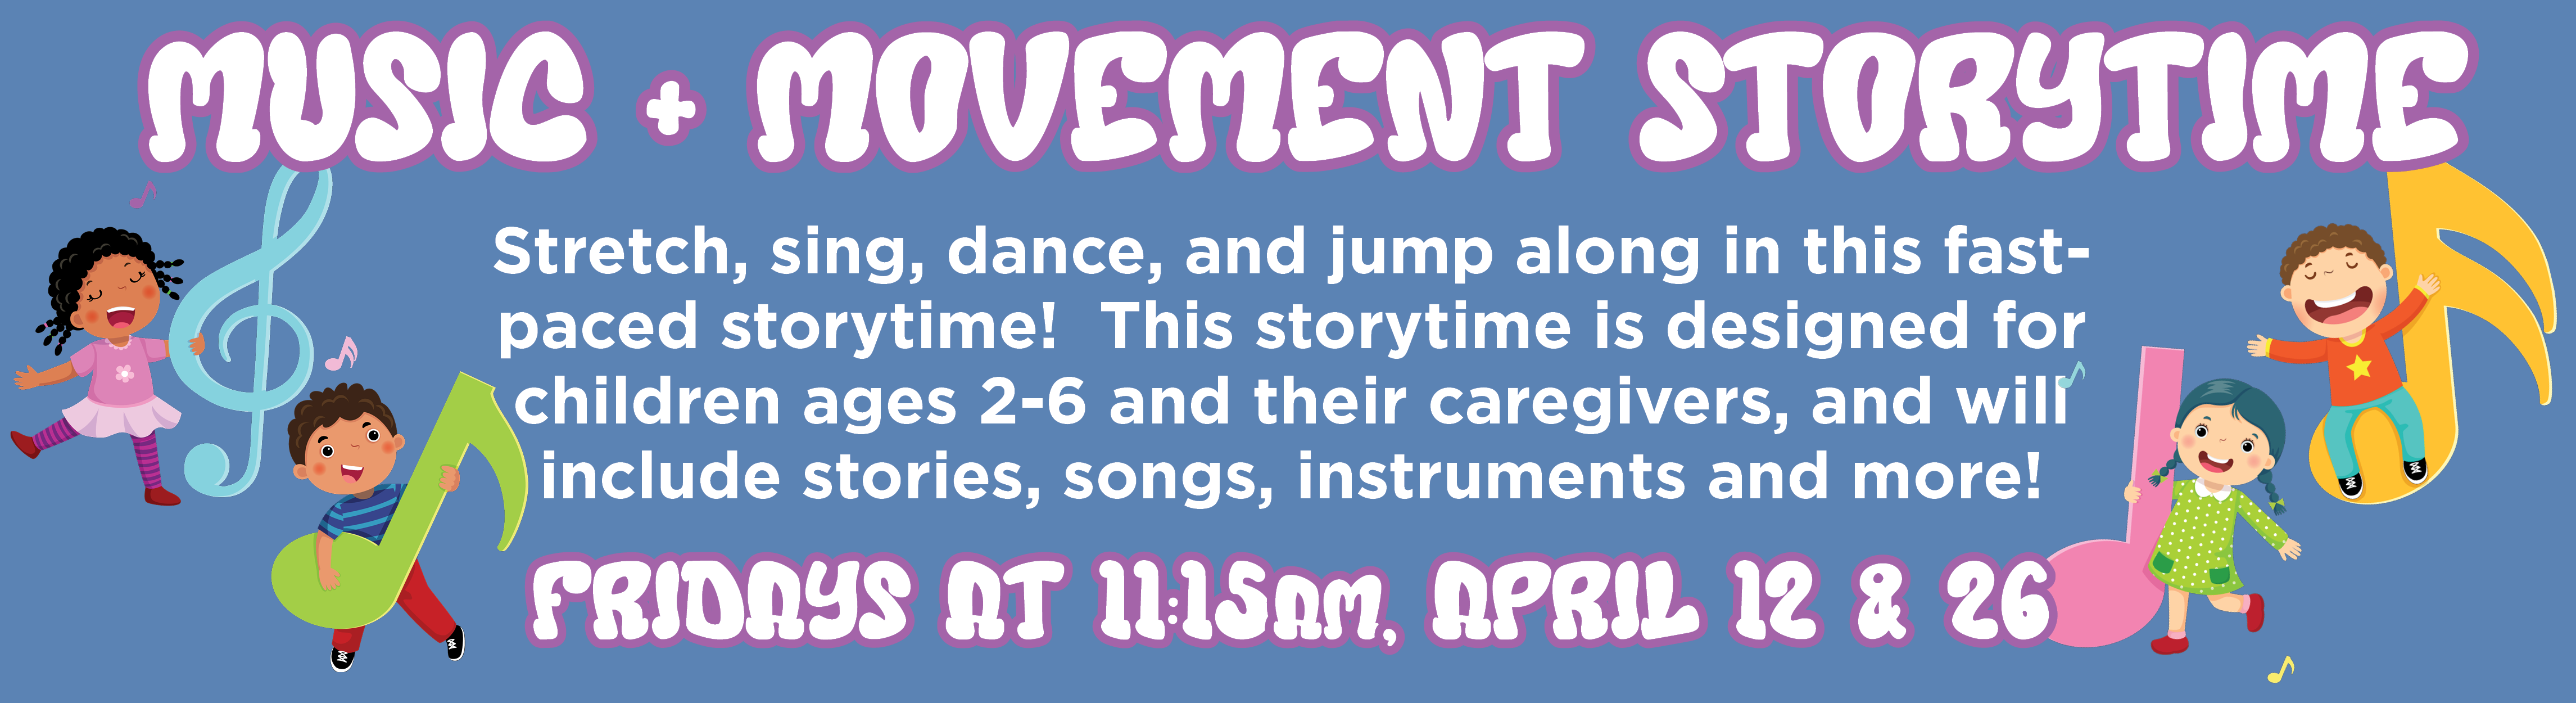 Music & Movement Storytime